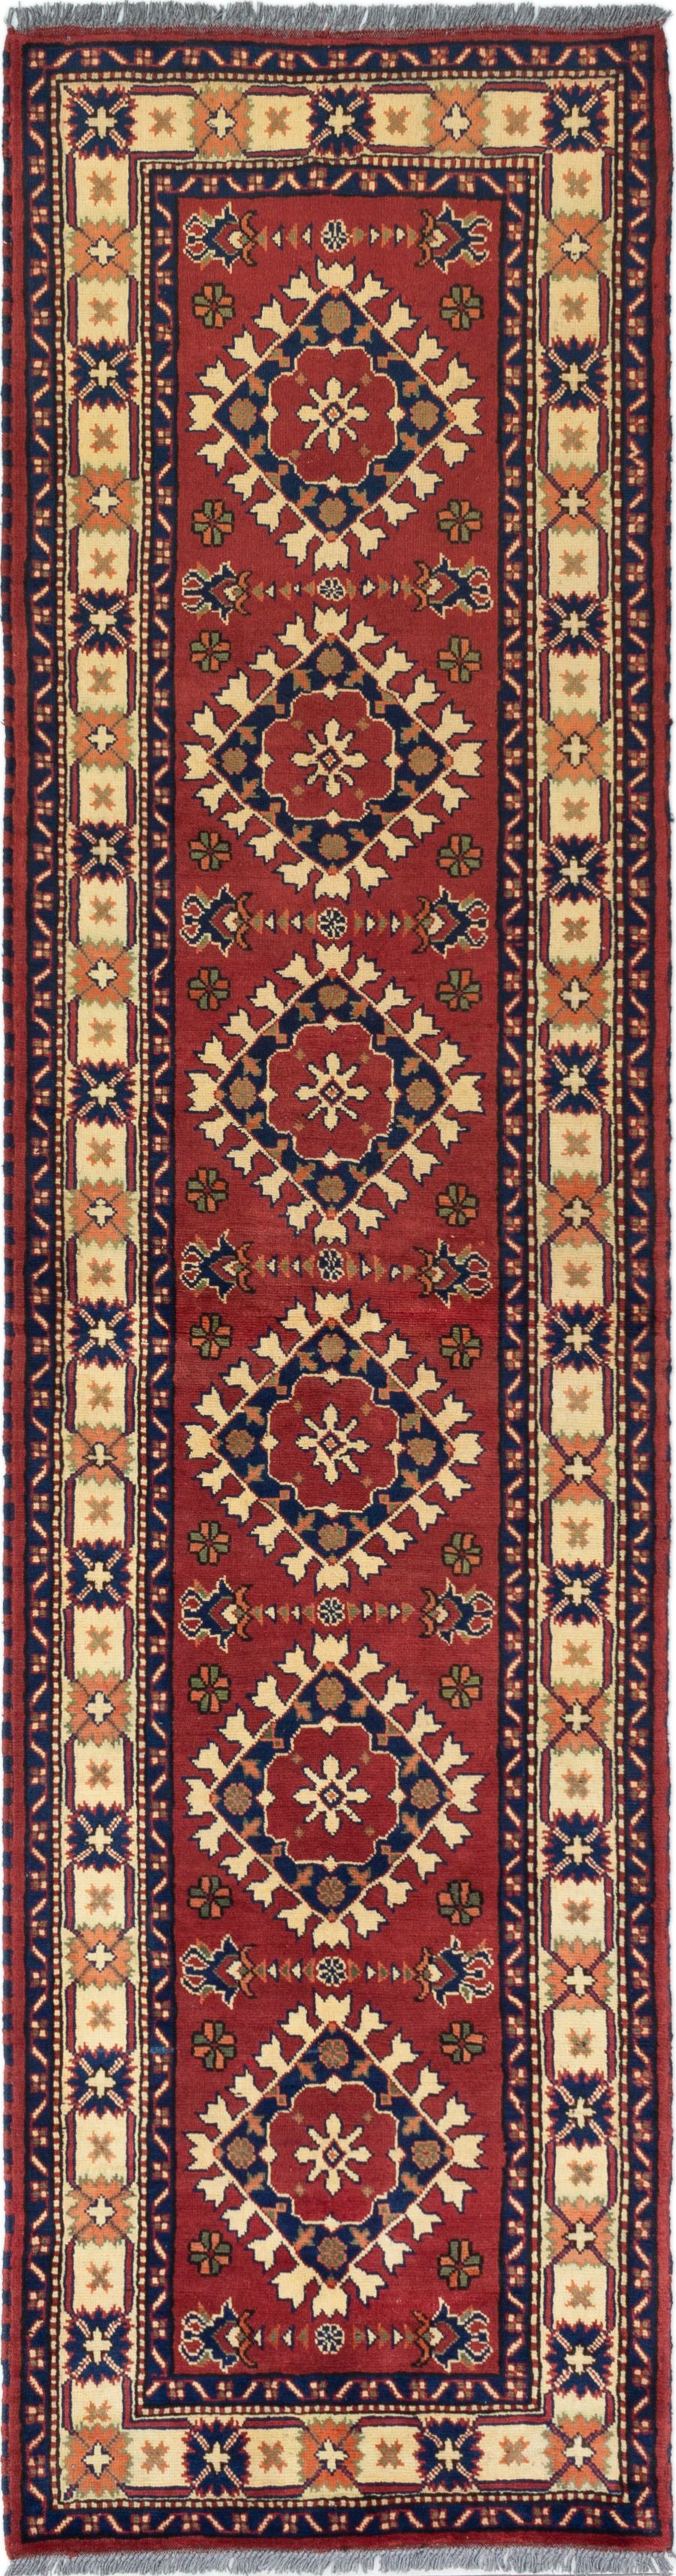 Hand-knotted Finest Kargahi Dark Red Wool Rug 2'8" x 10'4" Size: 2'8" x 10'4"  